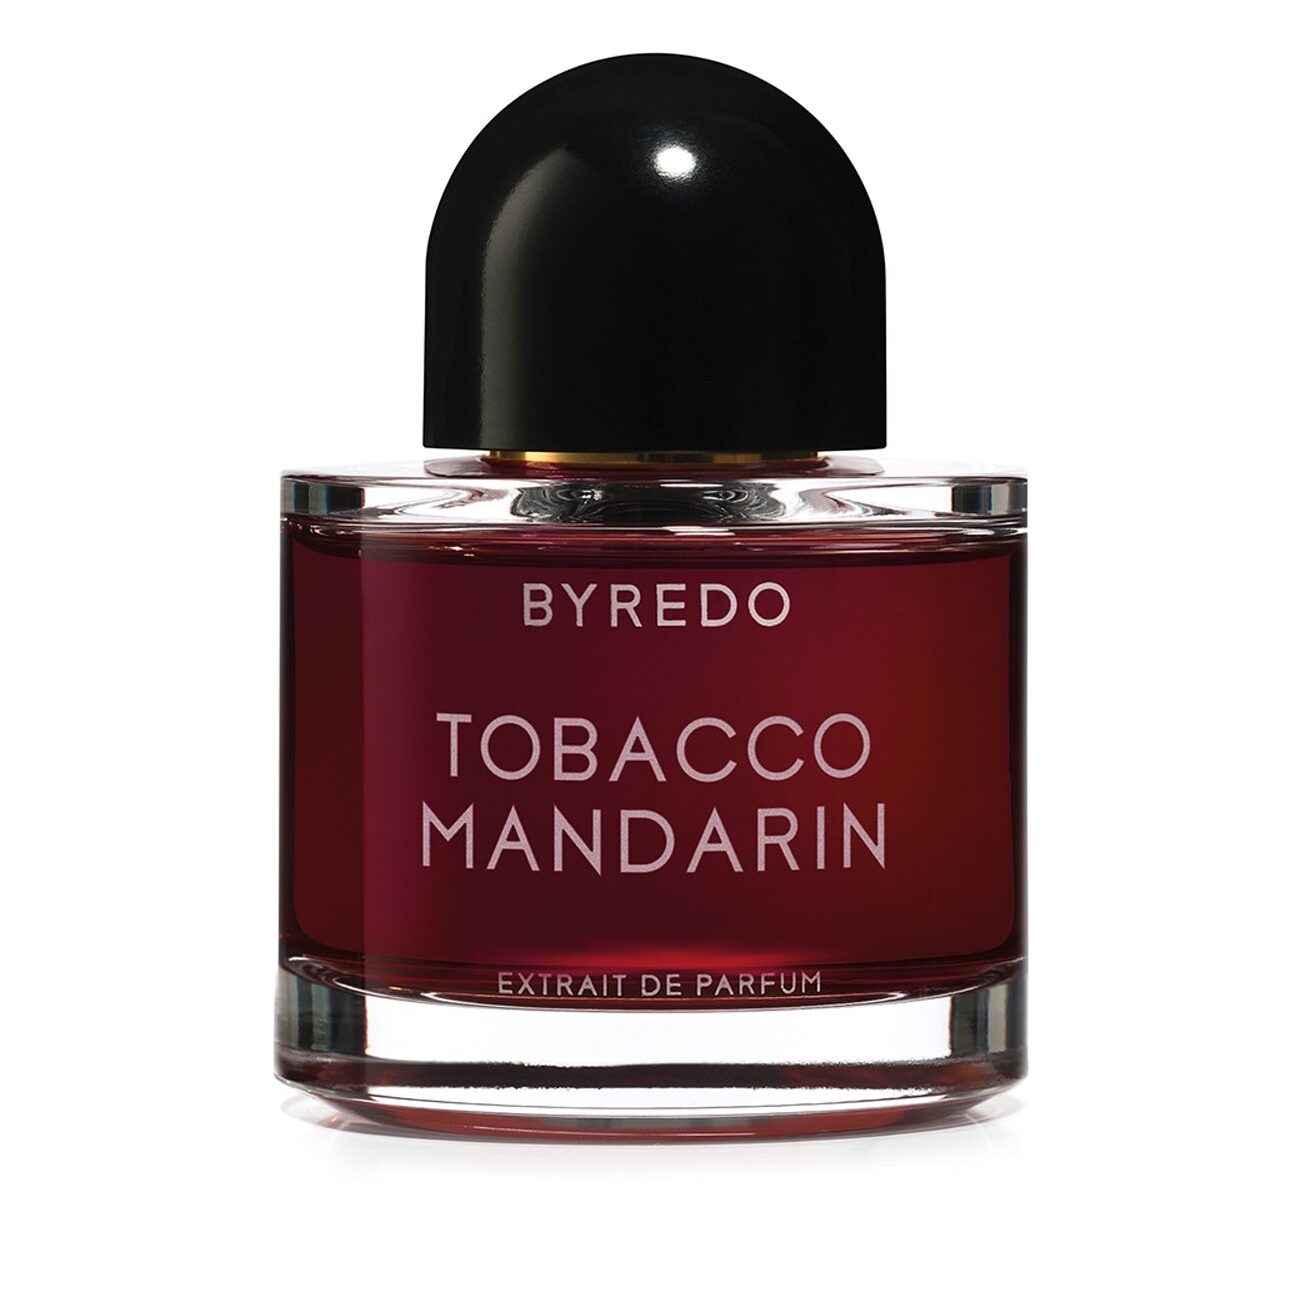 Byredo Tobacco Mandarin Review - 2020 - Persolaise